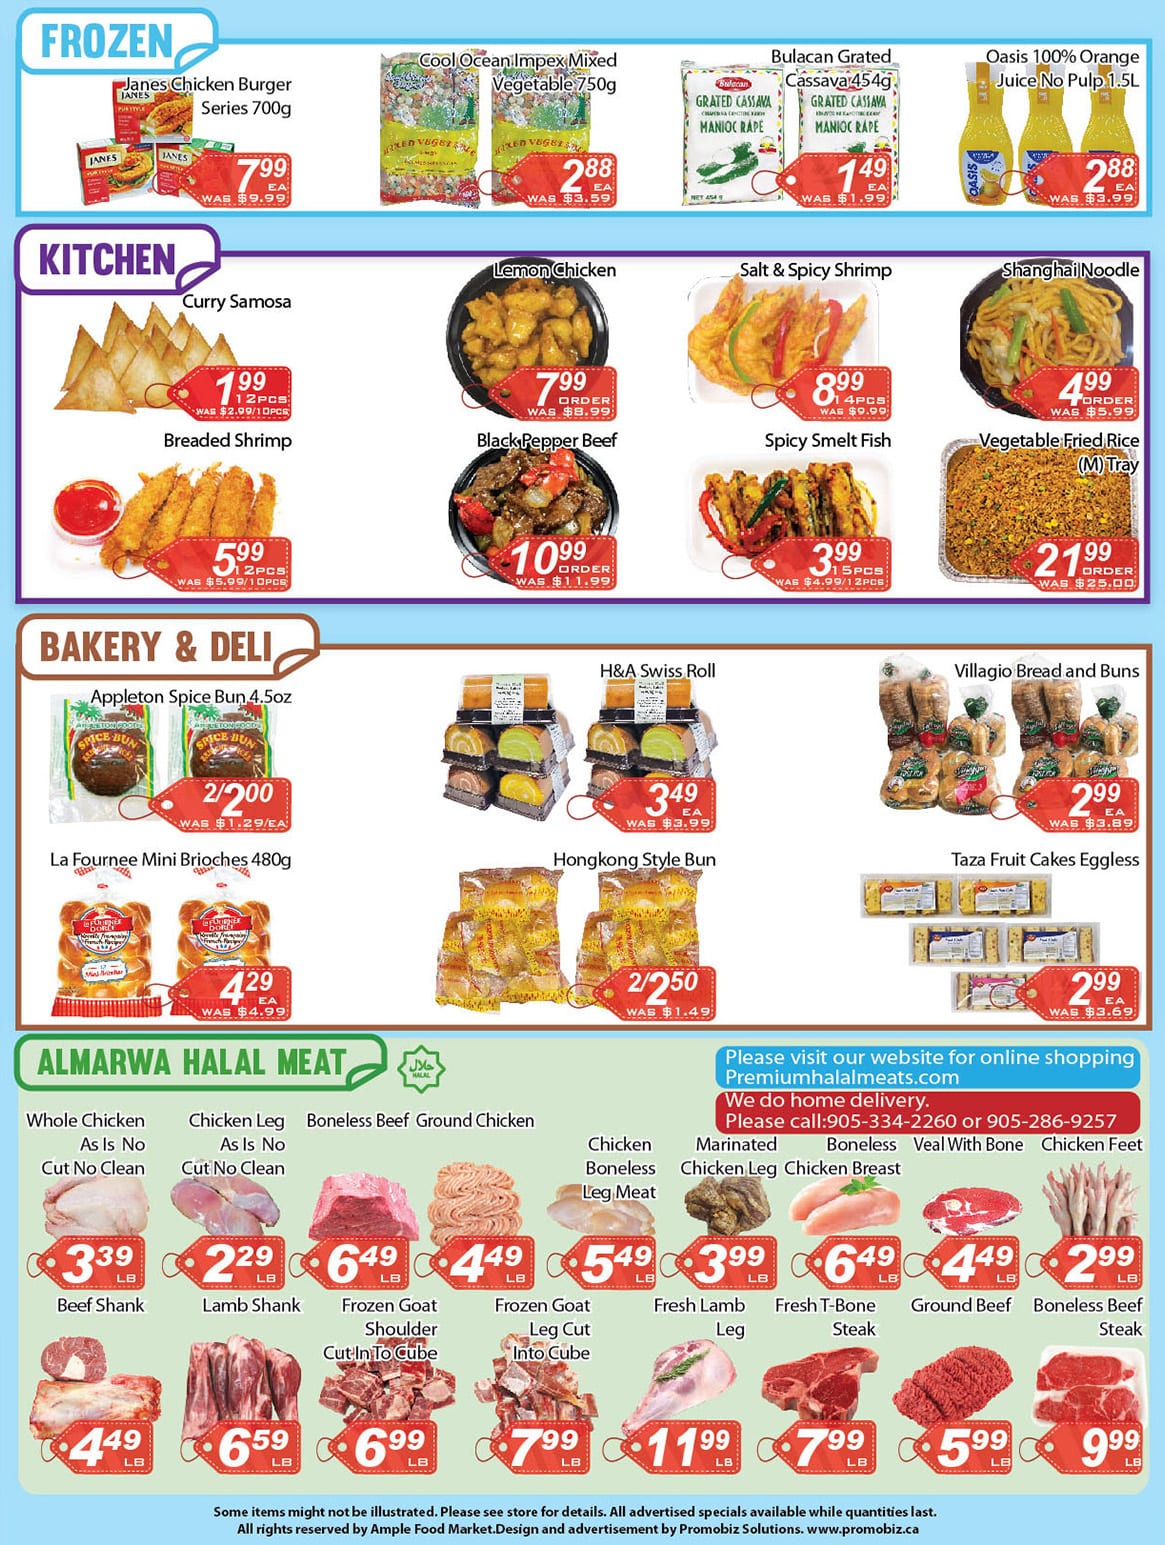 Ample Food Market Brampton - Weekly Flyer Specials - Page 4